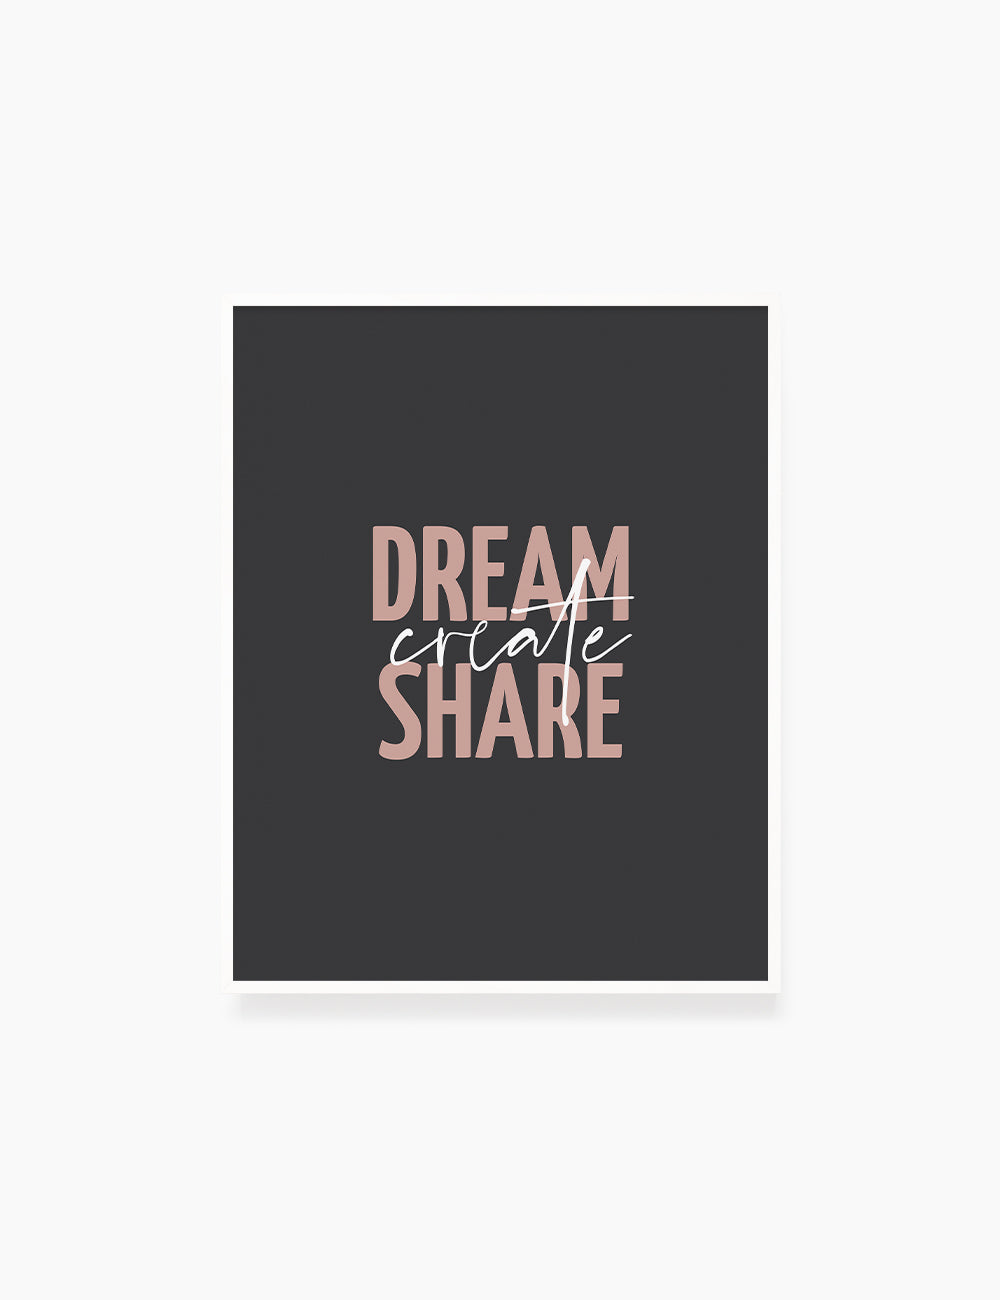 DREAM. CREATE. SHARE. Blush. Rose. Pale Red. Dark Grey. Black. Printable Wall Art Quote. - PAPER MOON Art & Design